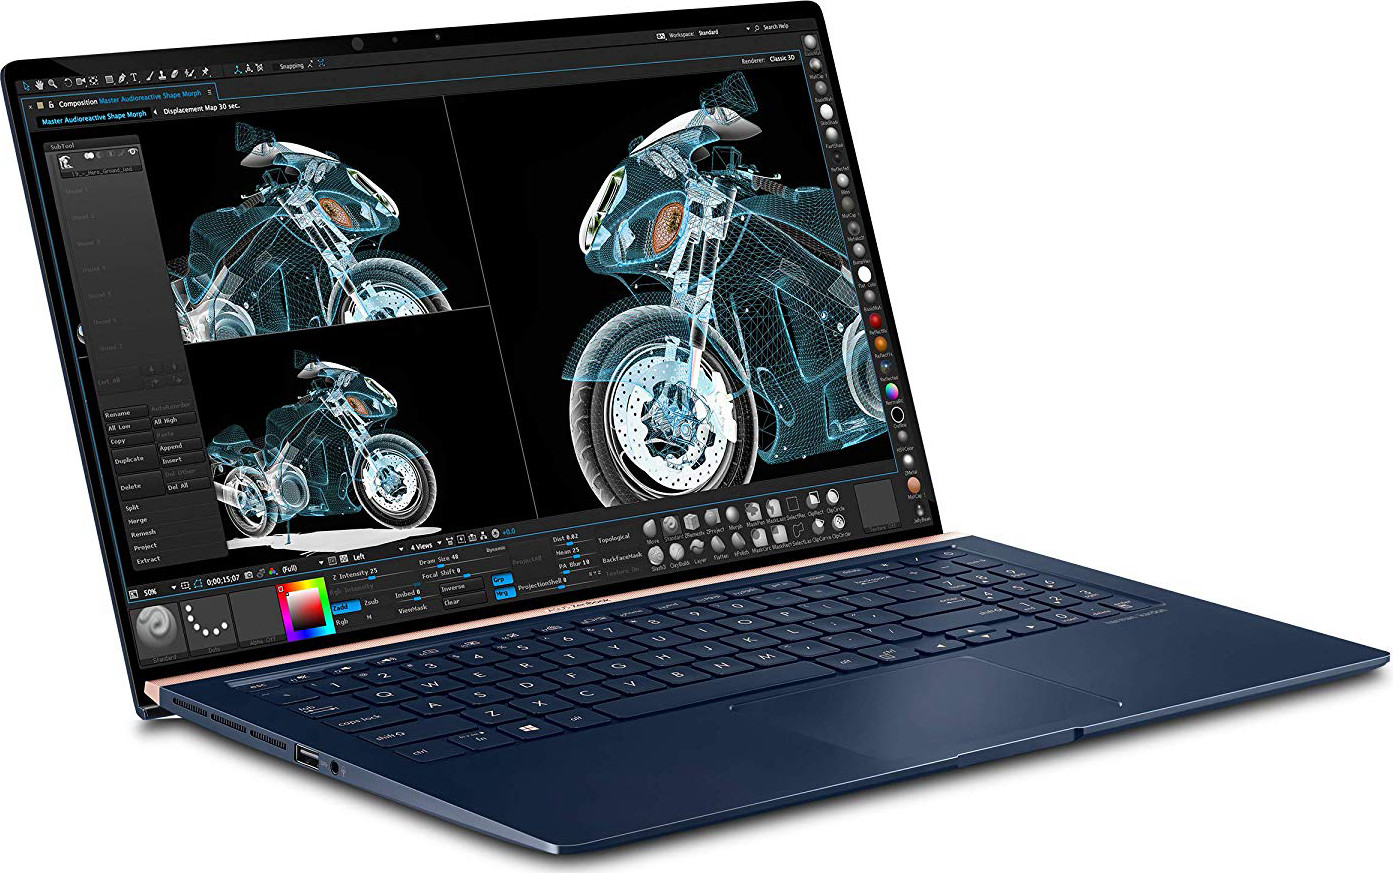 Asus ZenBook 15 Ultra Slim Compact Laptop 15.6” FHD 4-Way NanoEdge, Intel Core i7-8565U Processor, 16GB DDR4, 512GB PCIe SSD, GeForce GTX 1050, Ir Camera, Windows 10, UX533FD-DH74, Royal Blue